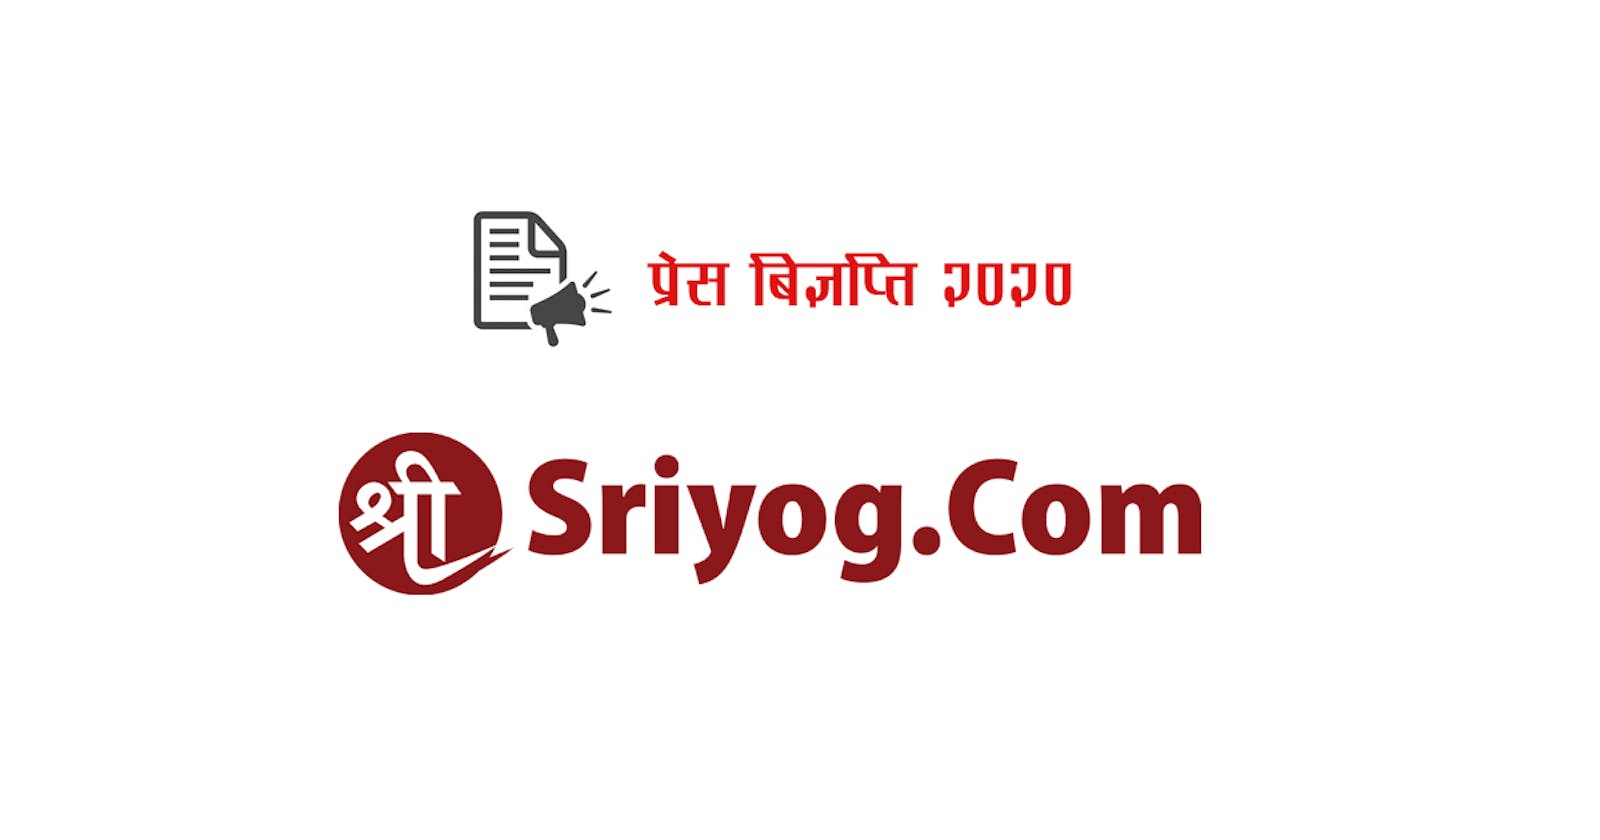 Sriyog.Com प्रेस बिज्ञप्ति २०२०